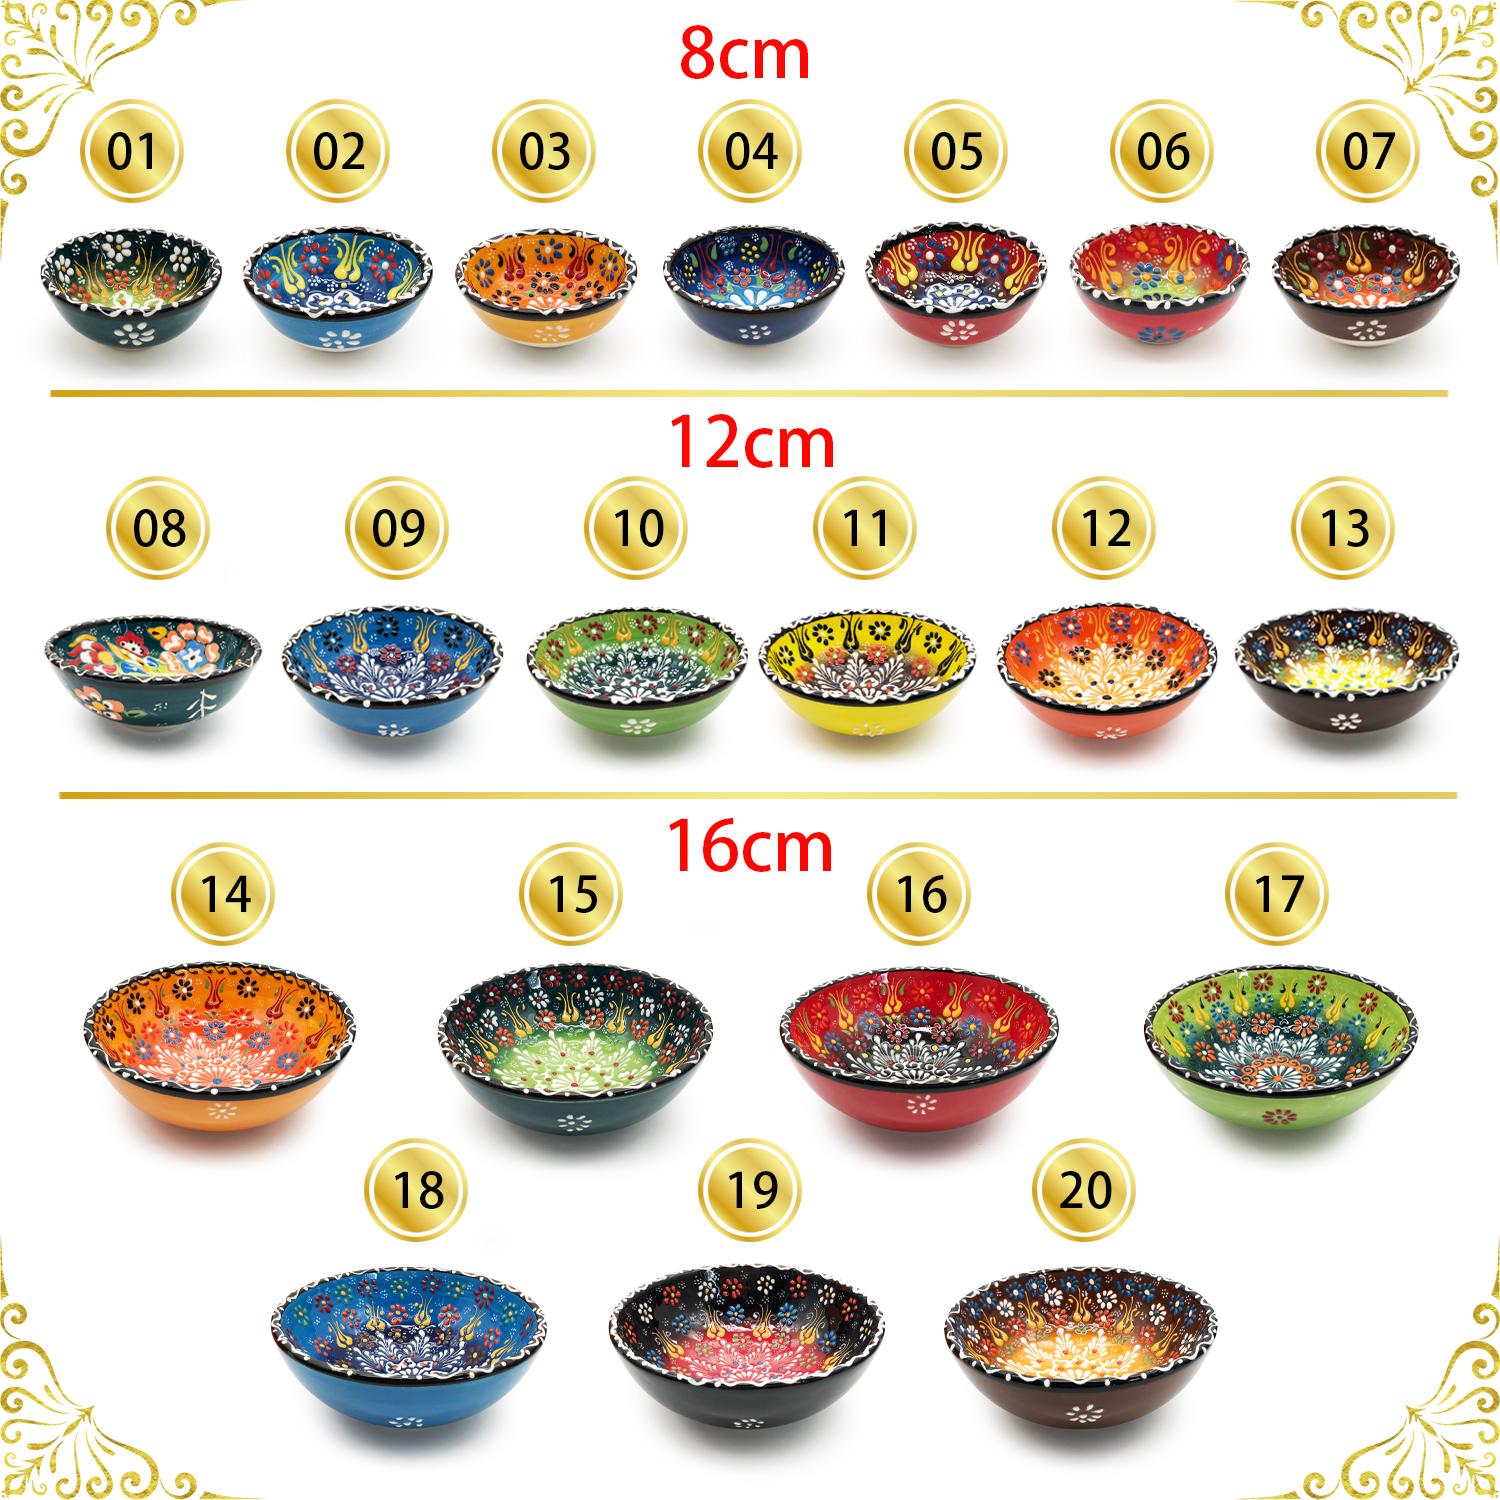 80MM手繪土耳其傳統工藝陶瓷碗， 土耳其餐具奧斯曼帝國浮雕圖案土耳其藝術時尚潮物(VTR-CERAMIC-BOWL-80MM-30003)